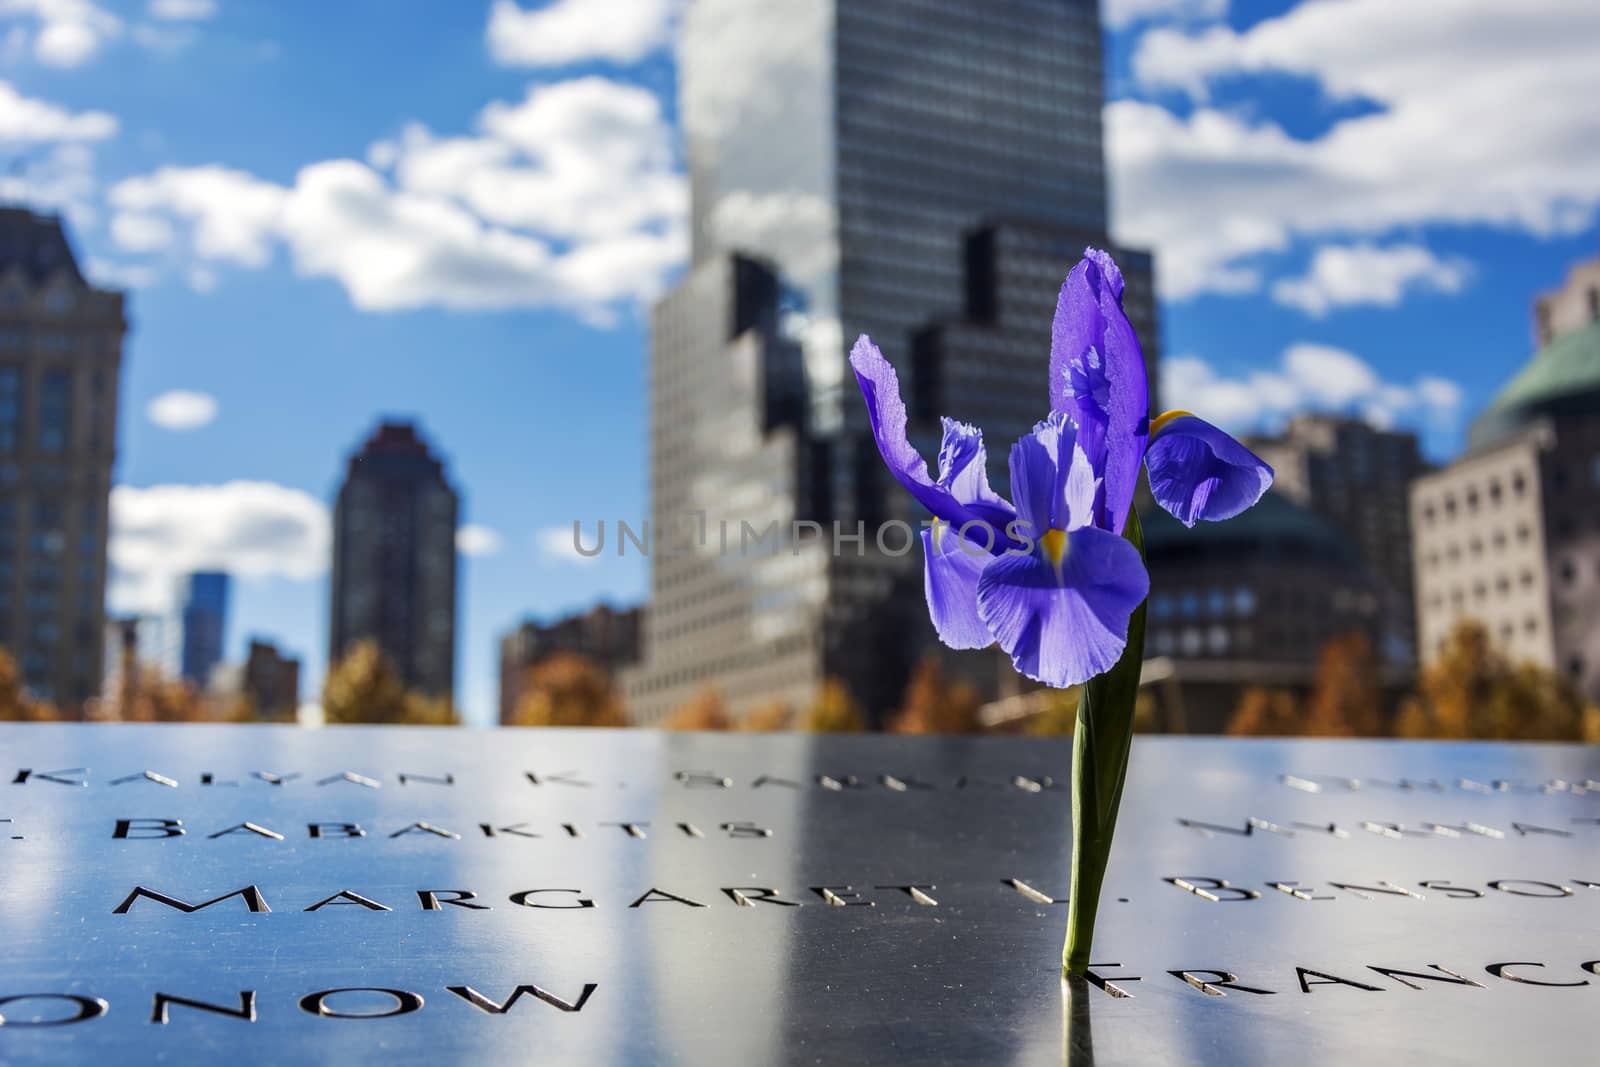 flower at the 911 memorial world trade center, New York